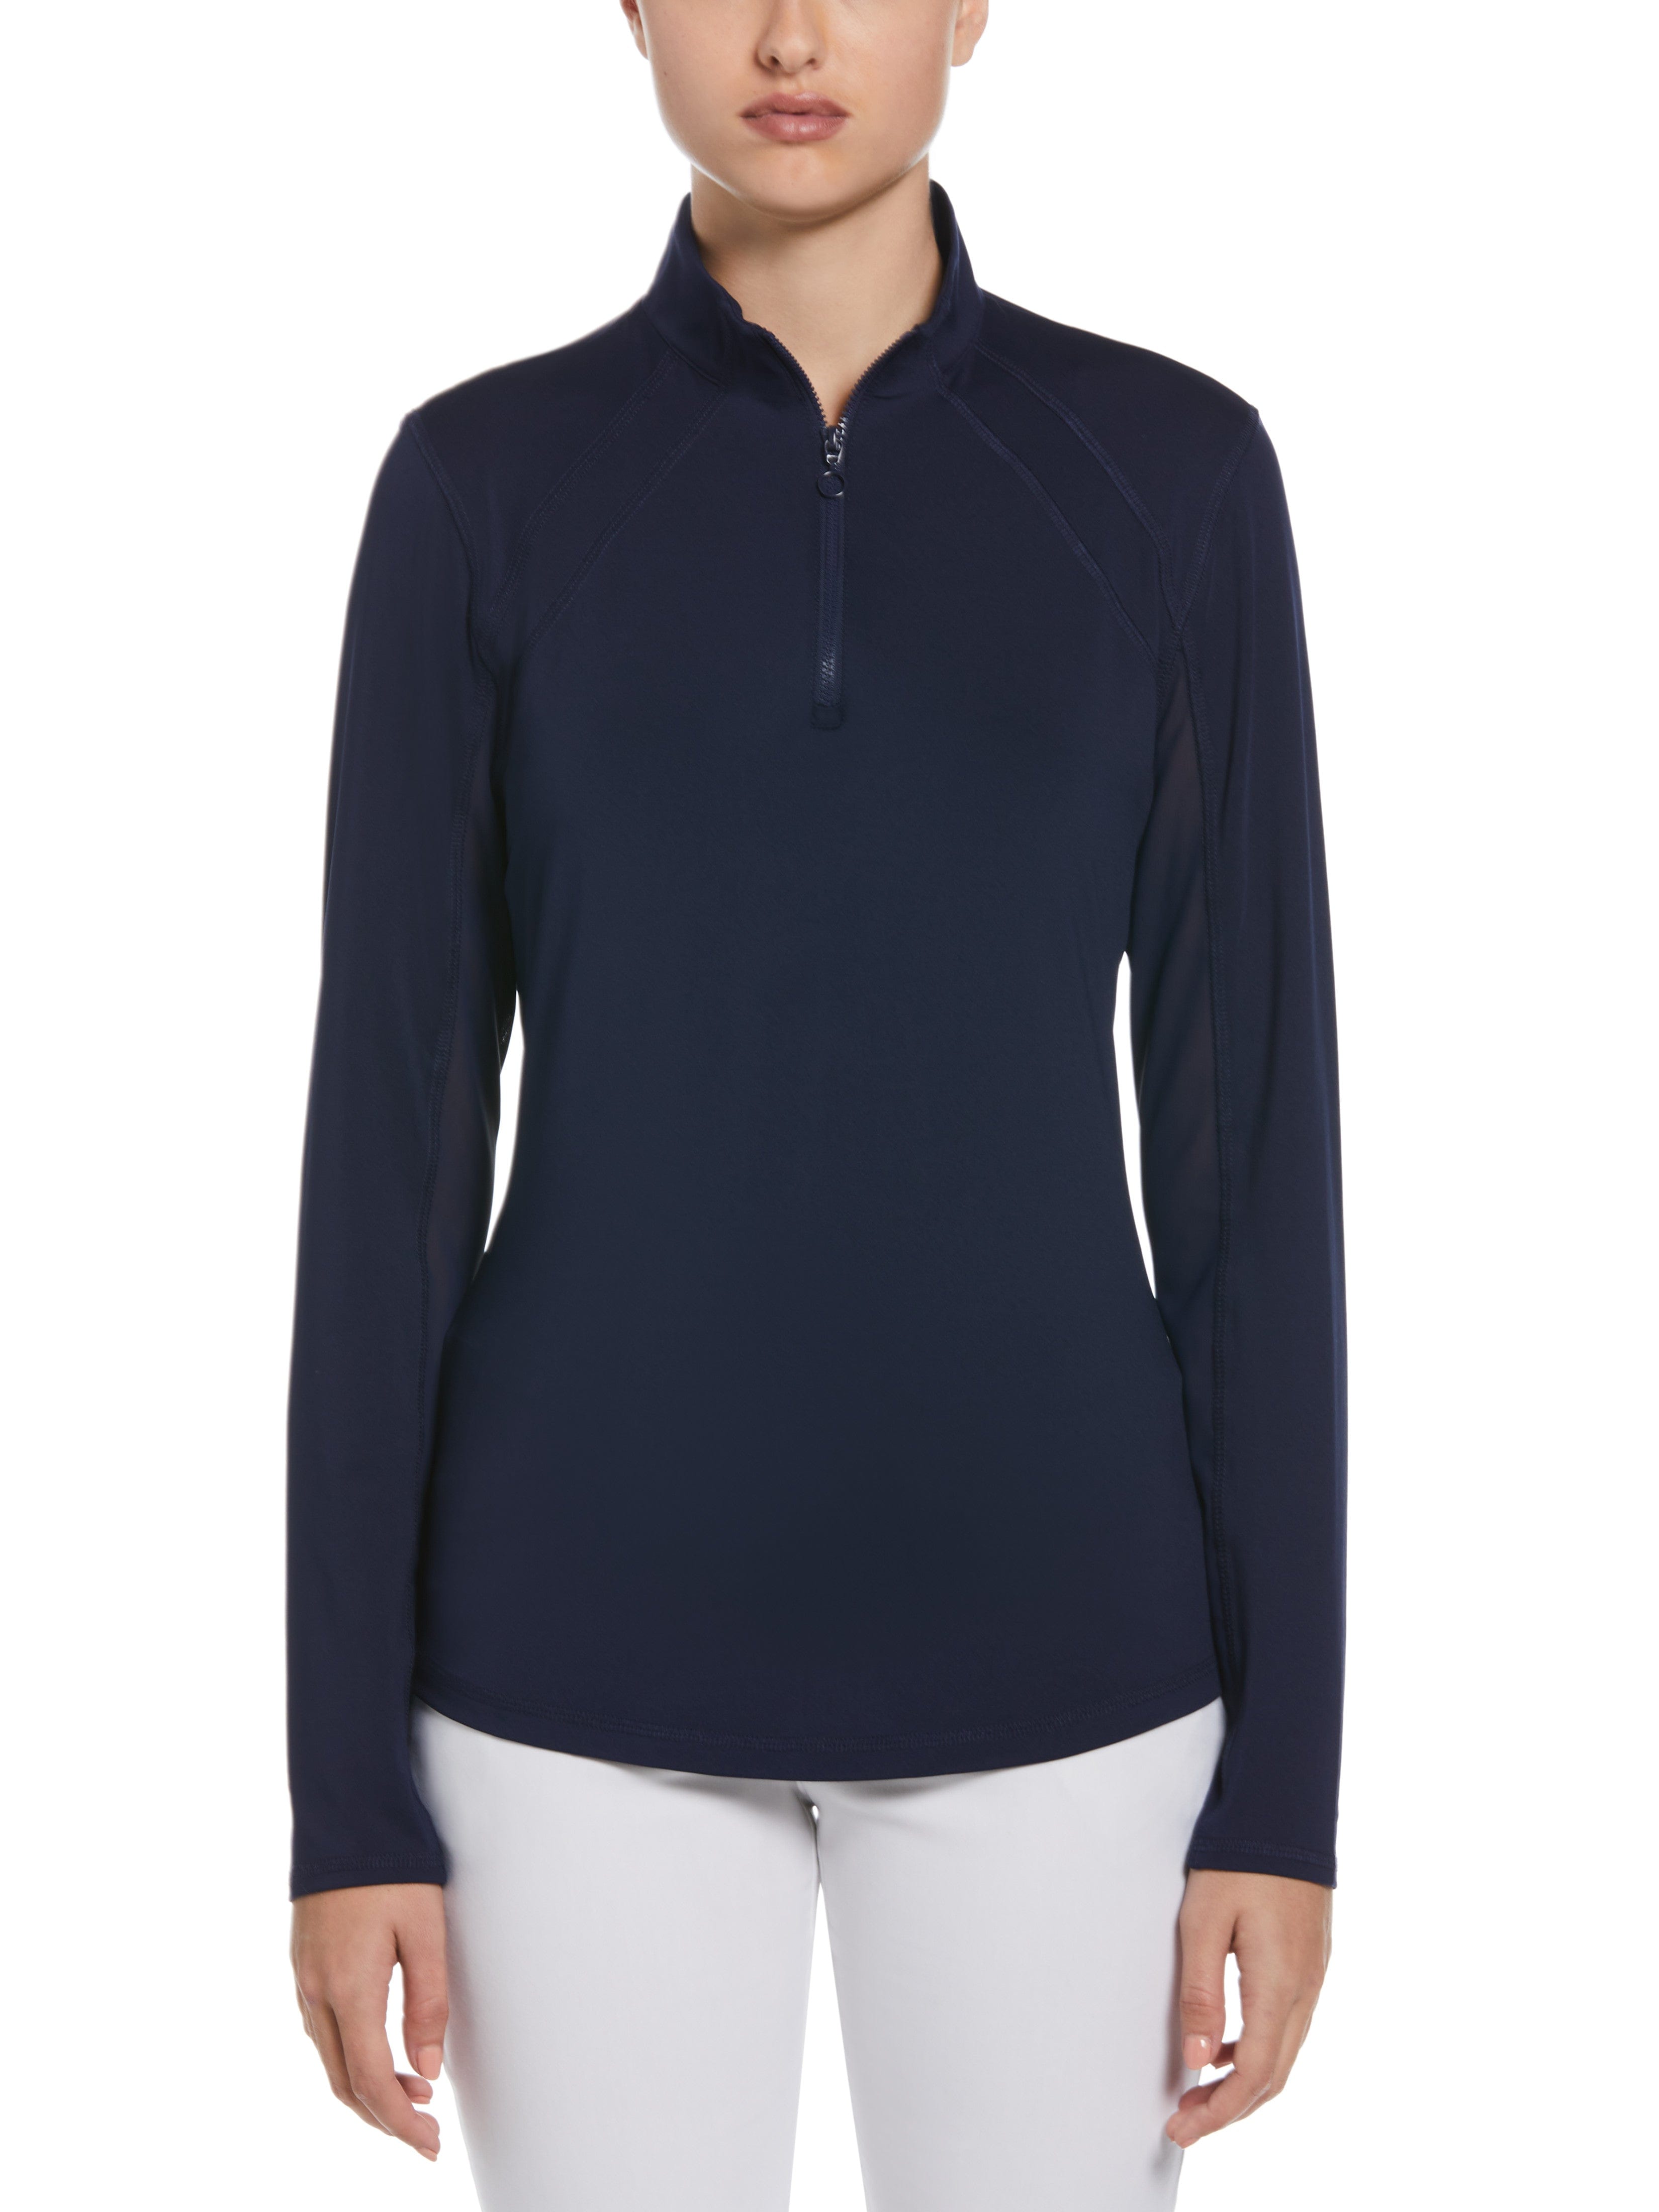 PGA TOUR Apparel Womens Sun Protection Golf Shirt w/ Mesh Panels, Size Small, Navy Blue, Polyester/Spandex | Golf Apparel Shop